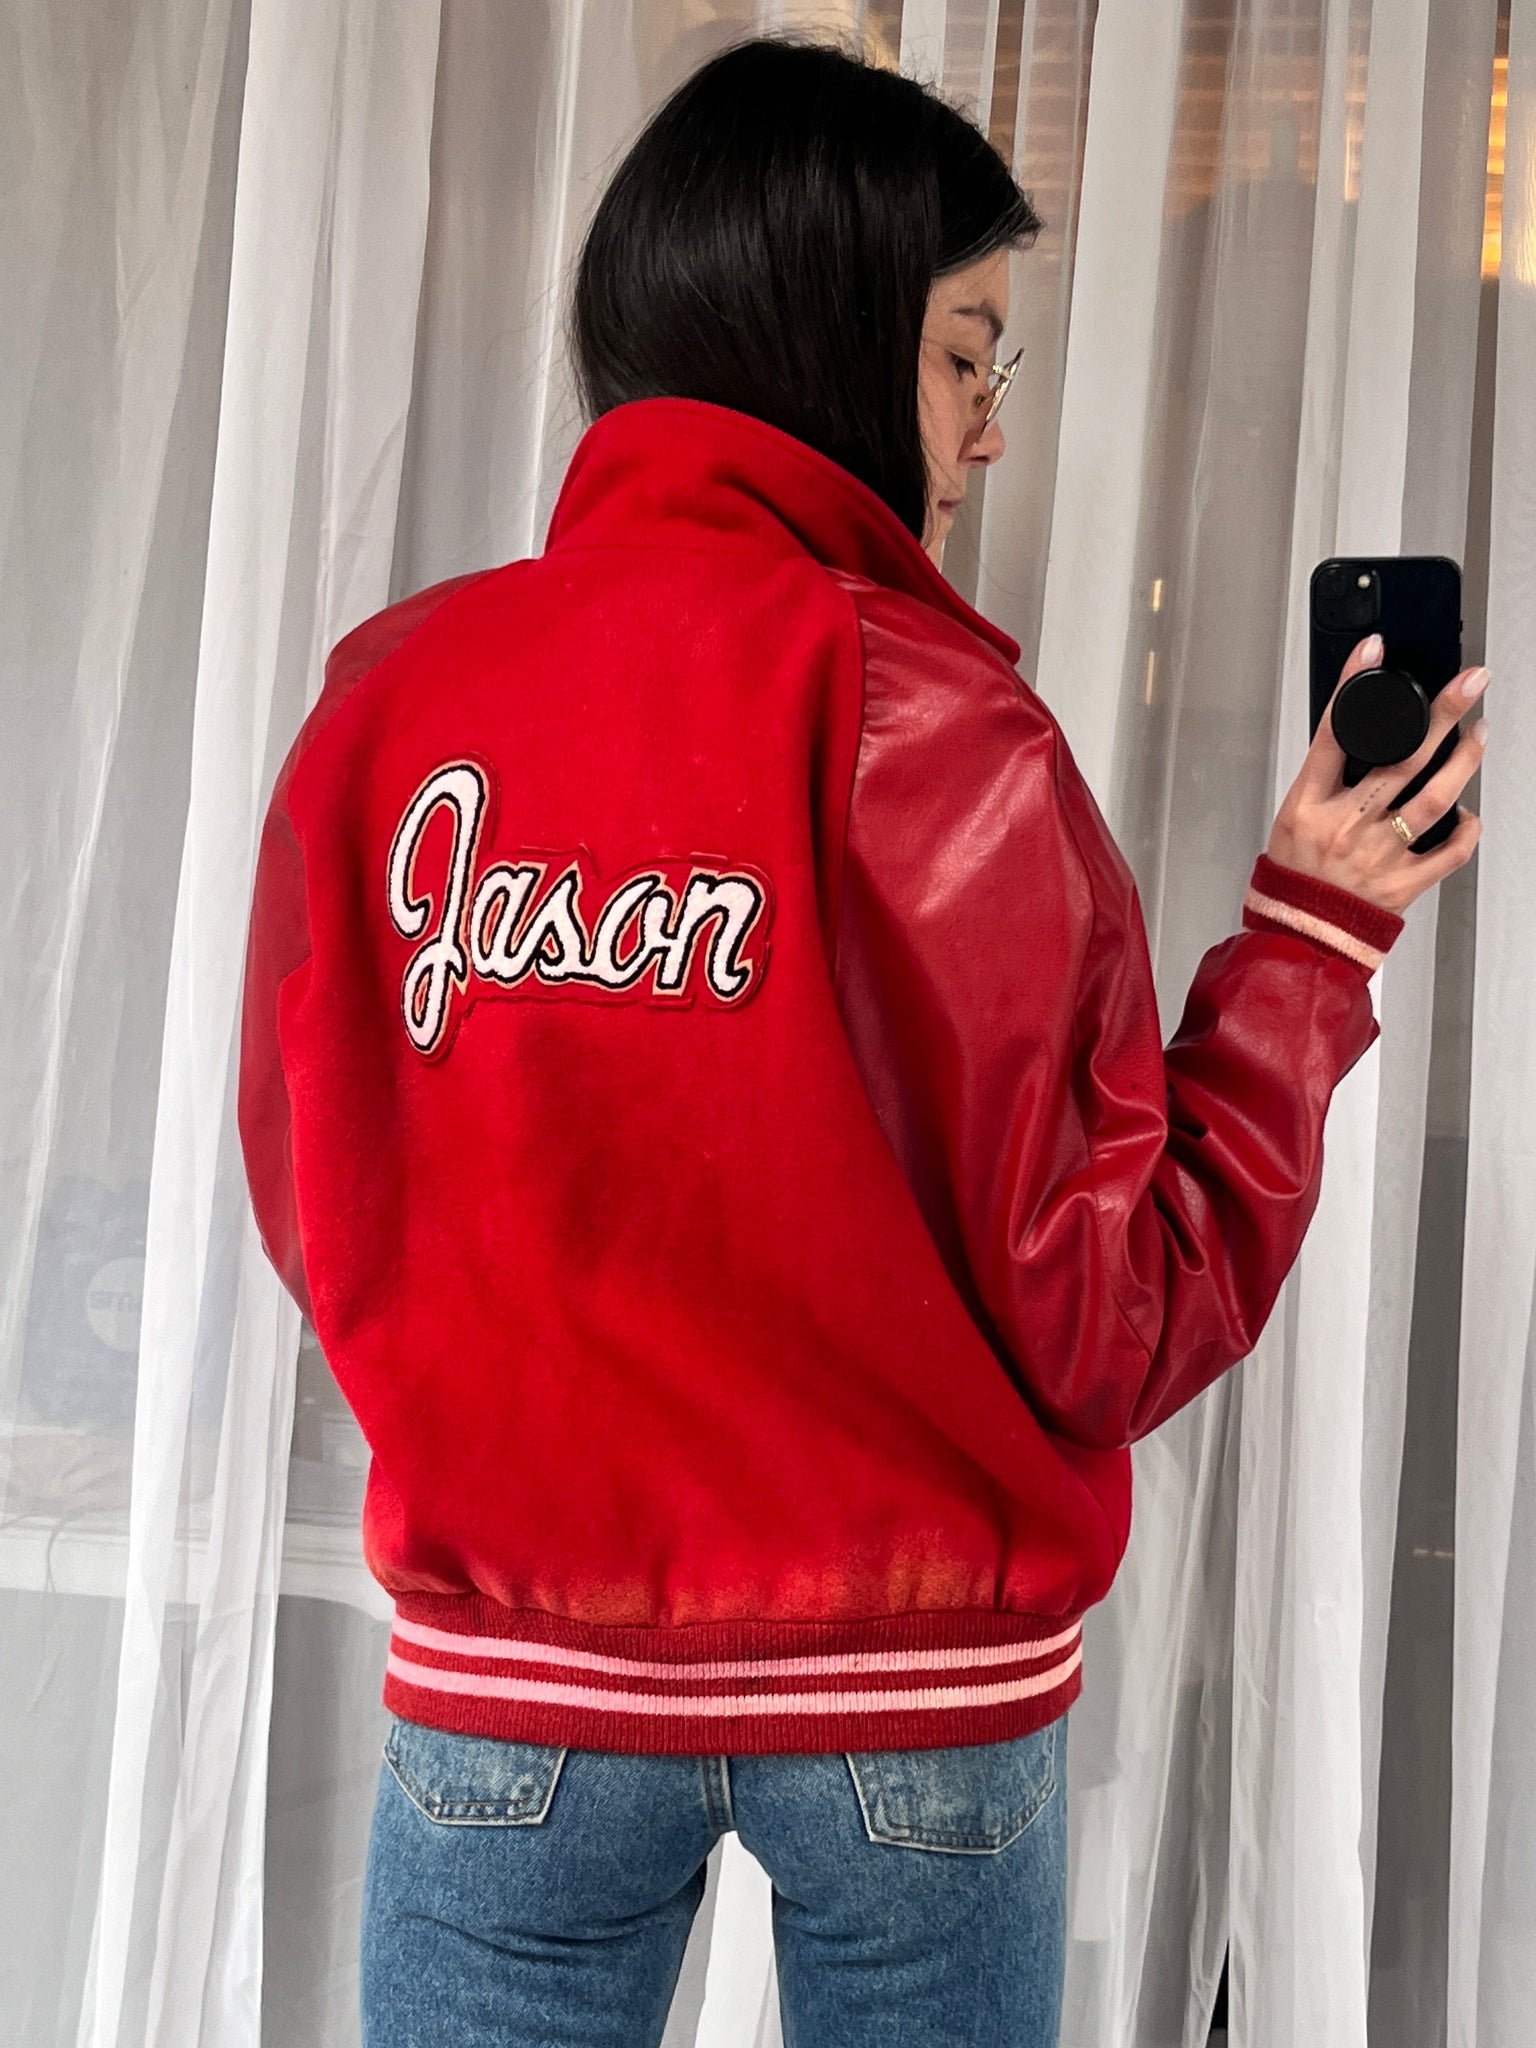 1960s "Jason" cherry red letterman jacket